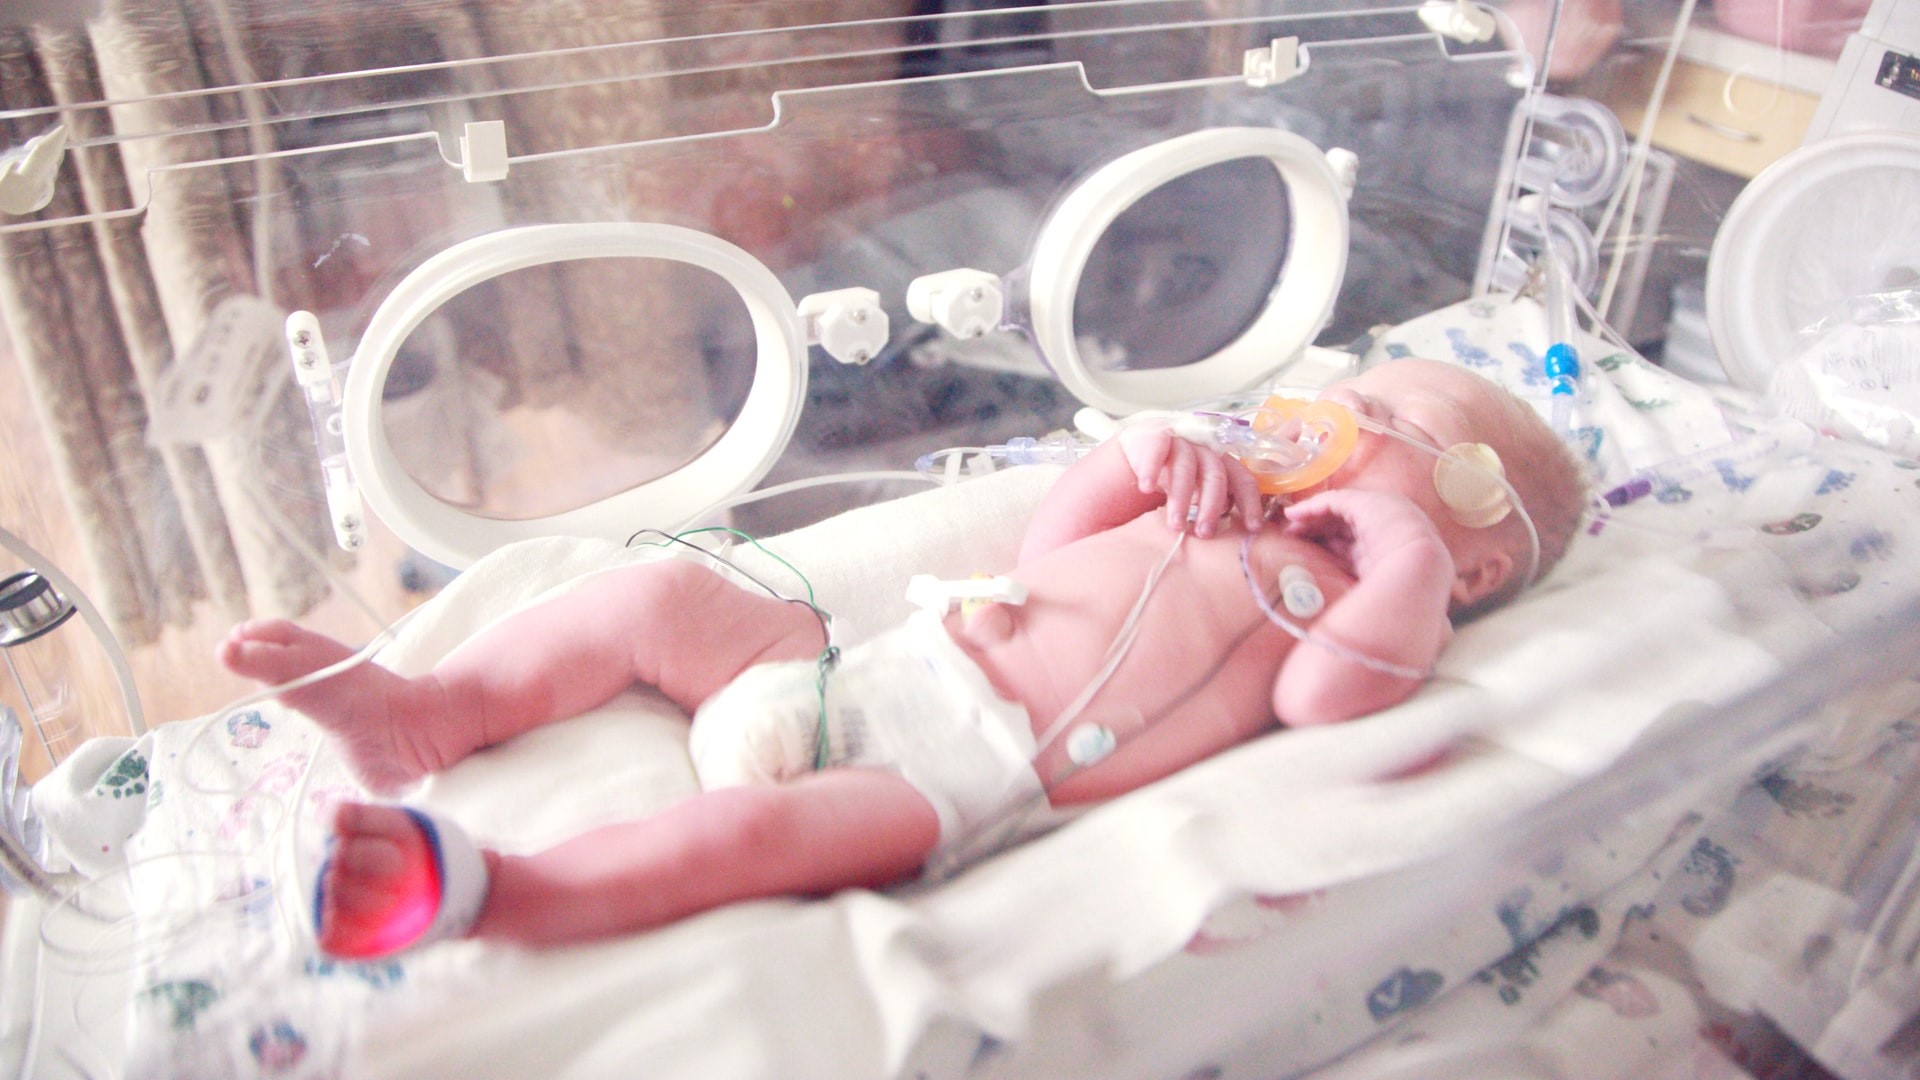 Anuncia orden ejecutiva que protege a los bebés que sobreviven al aborto